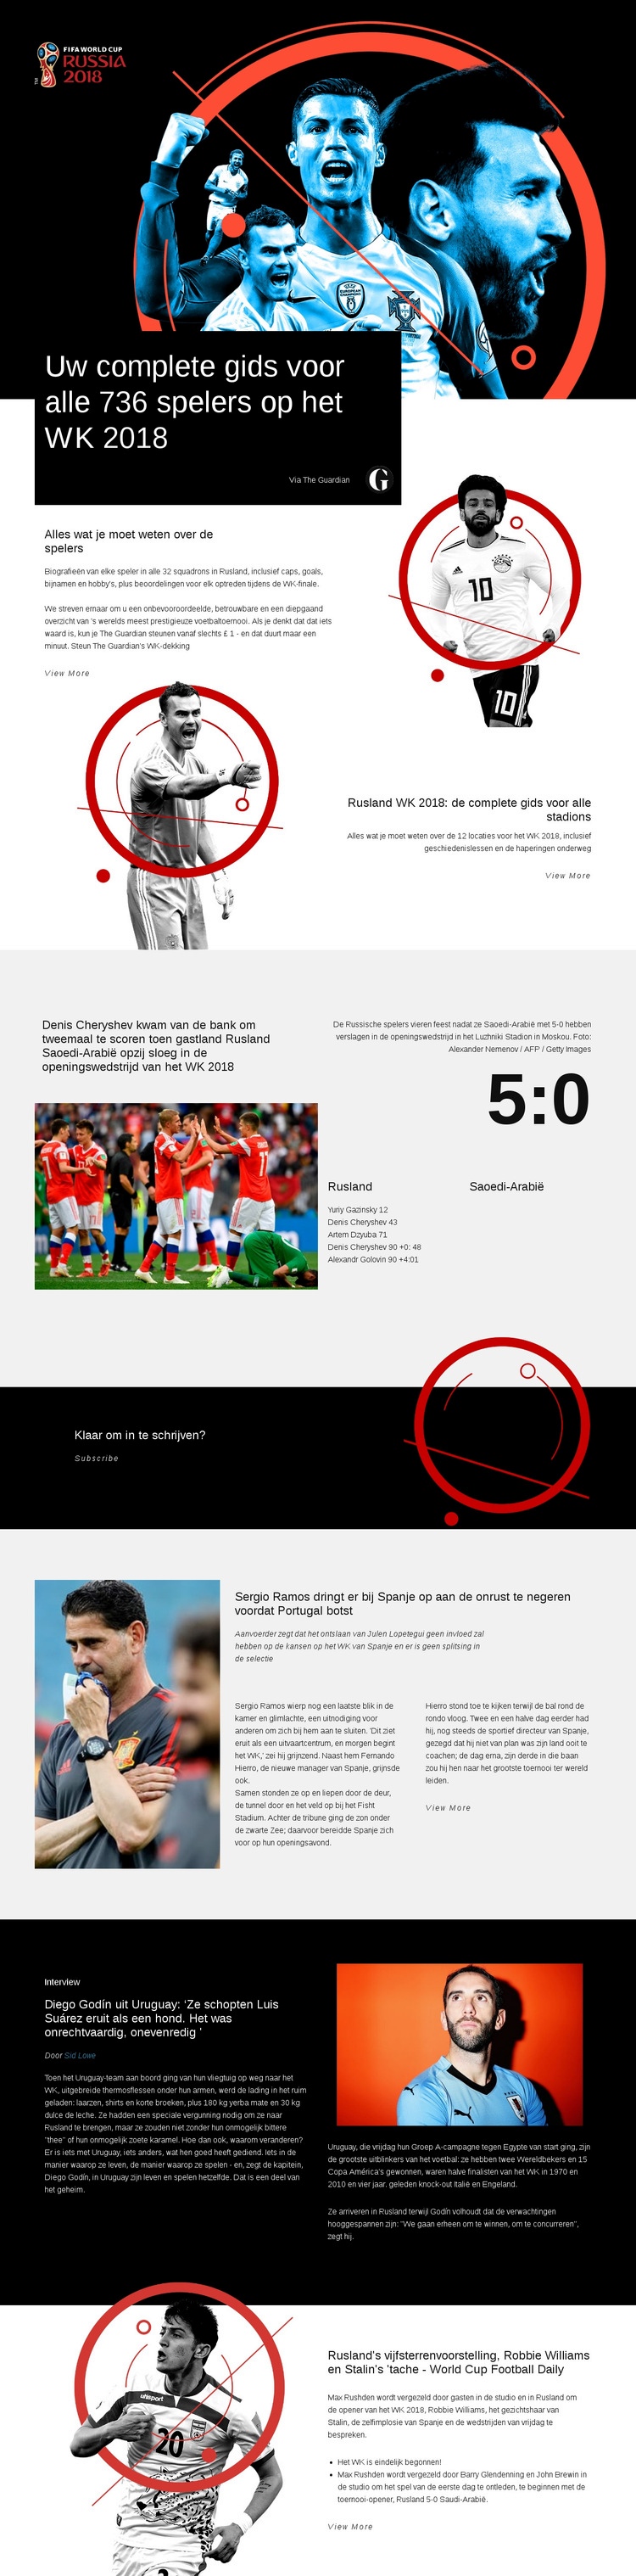 WK 2018 Website mockup